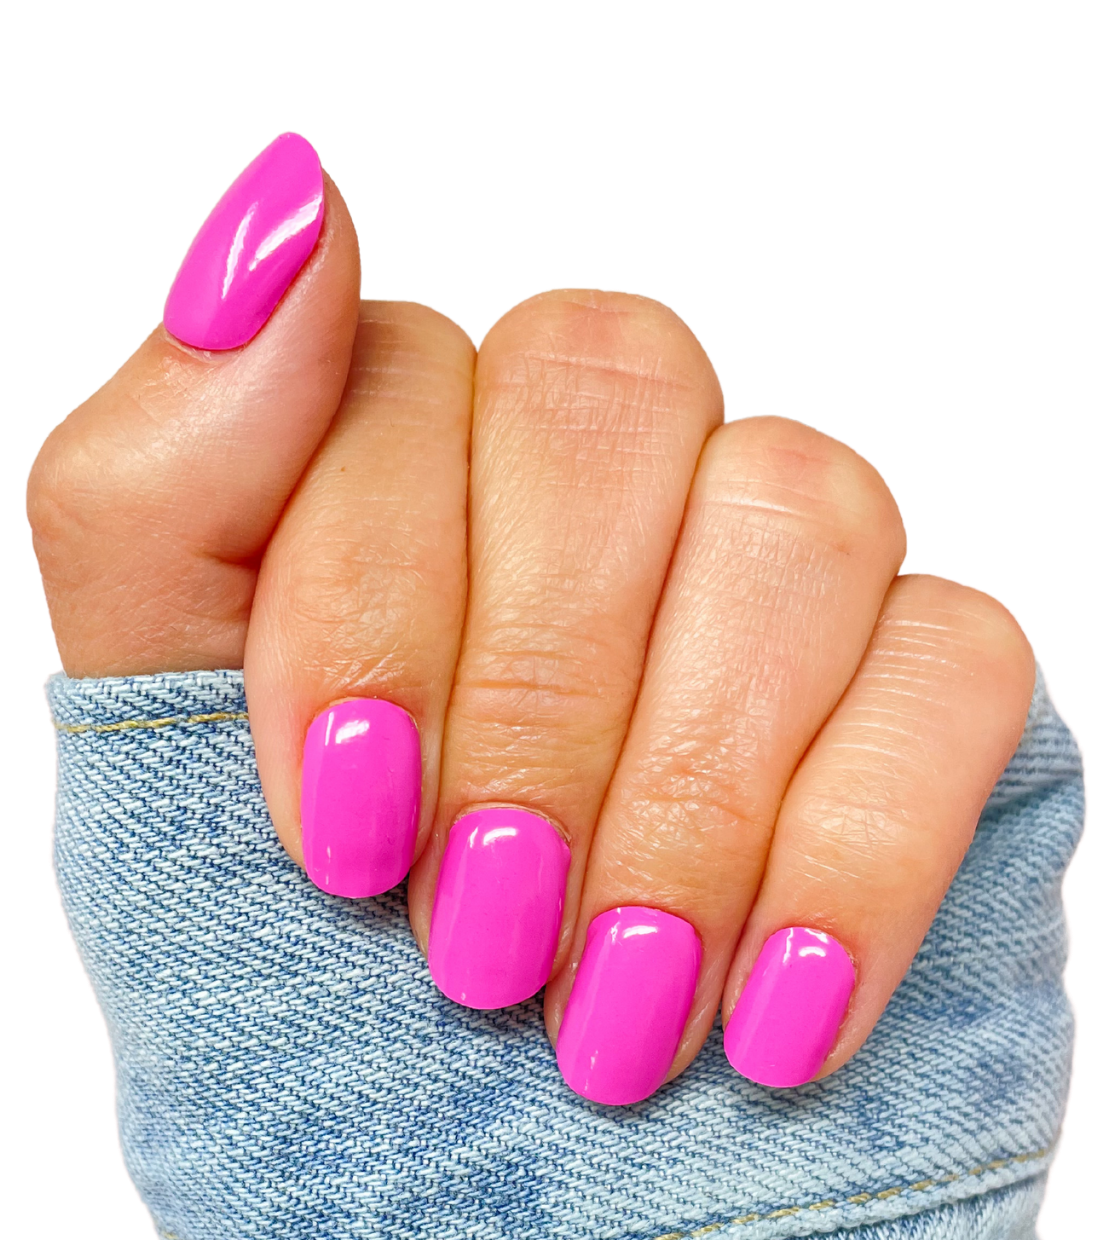 Amazon.com : Imtiti Sheer Pink Gel Nail Polish, 15ML Jelly Pink Translucent  Color UV/LED Soak Off Gel Polish for DIY Nail Art Manicure and Pedicure at  Home or Salon, 0.5 fl oz